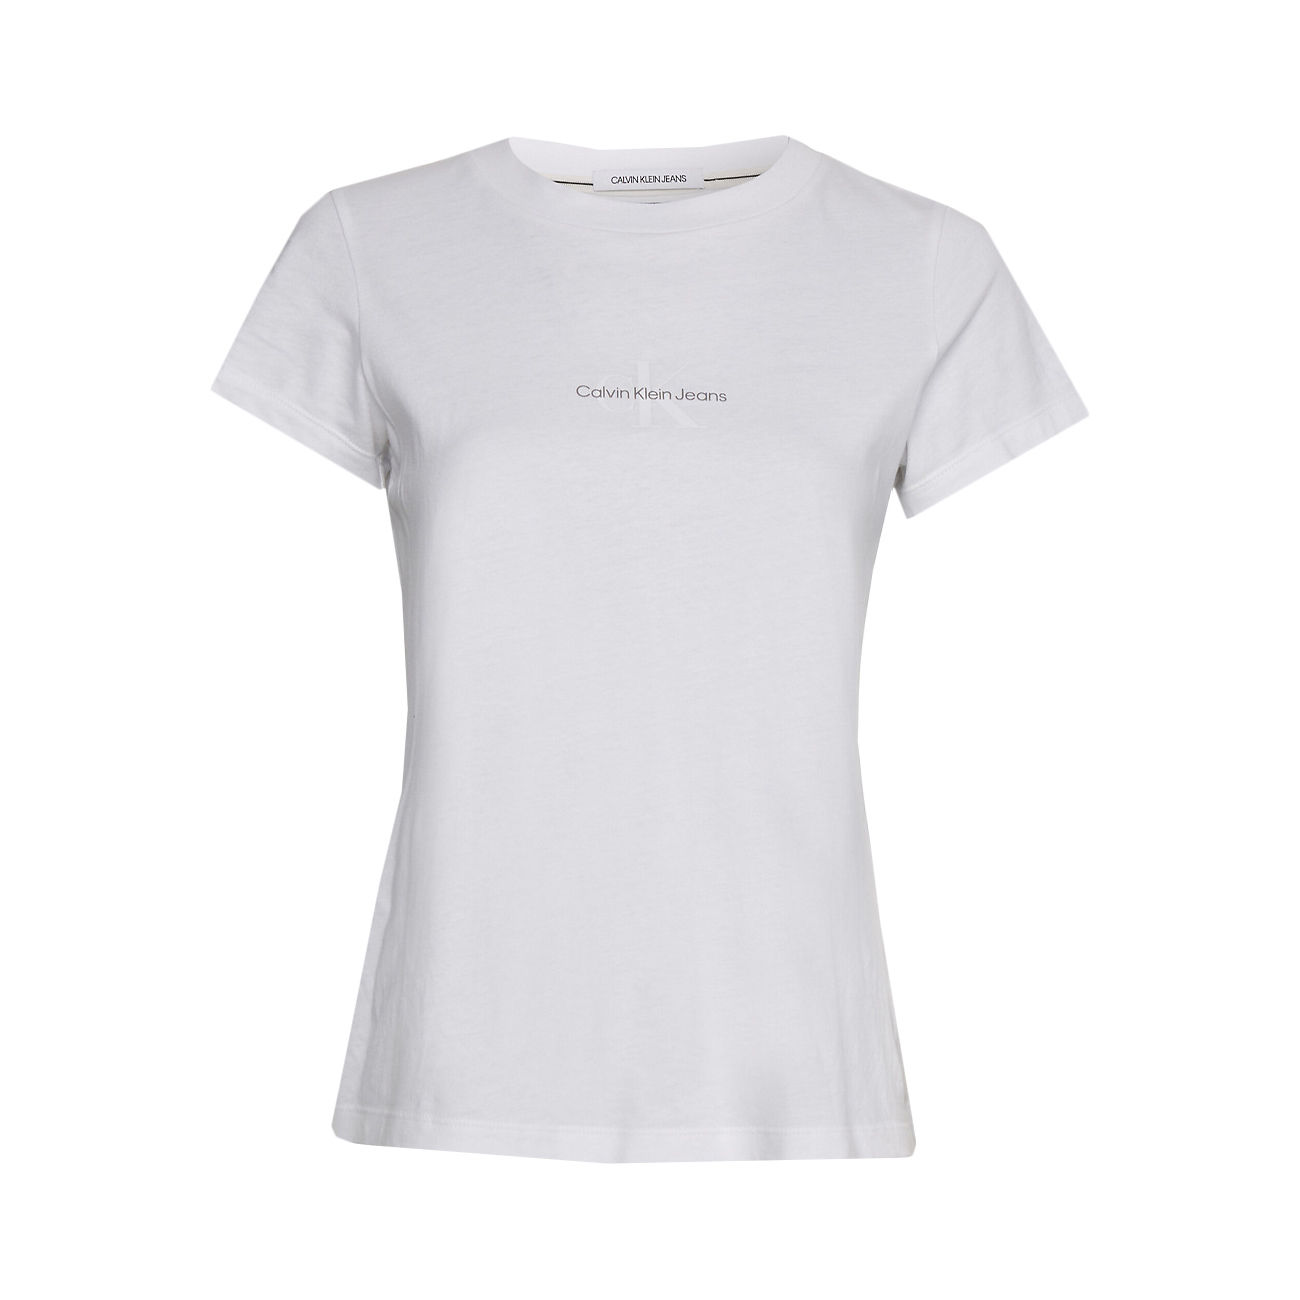 Calvin Klein Jeans Monogram Logo T Shirt Grey